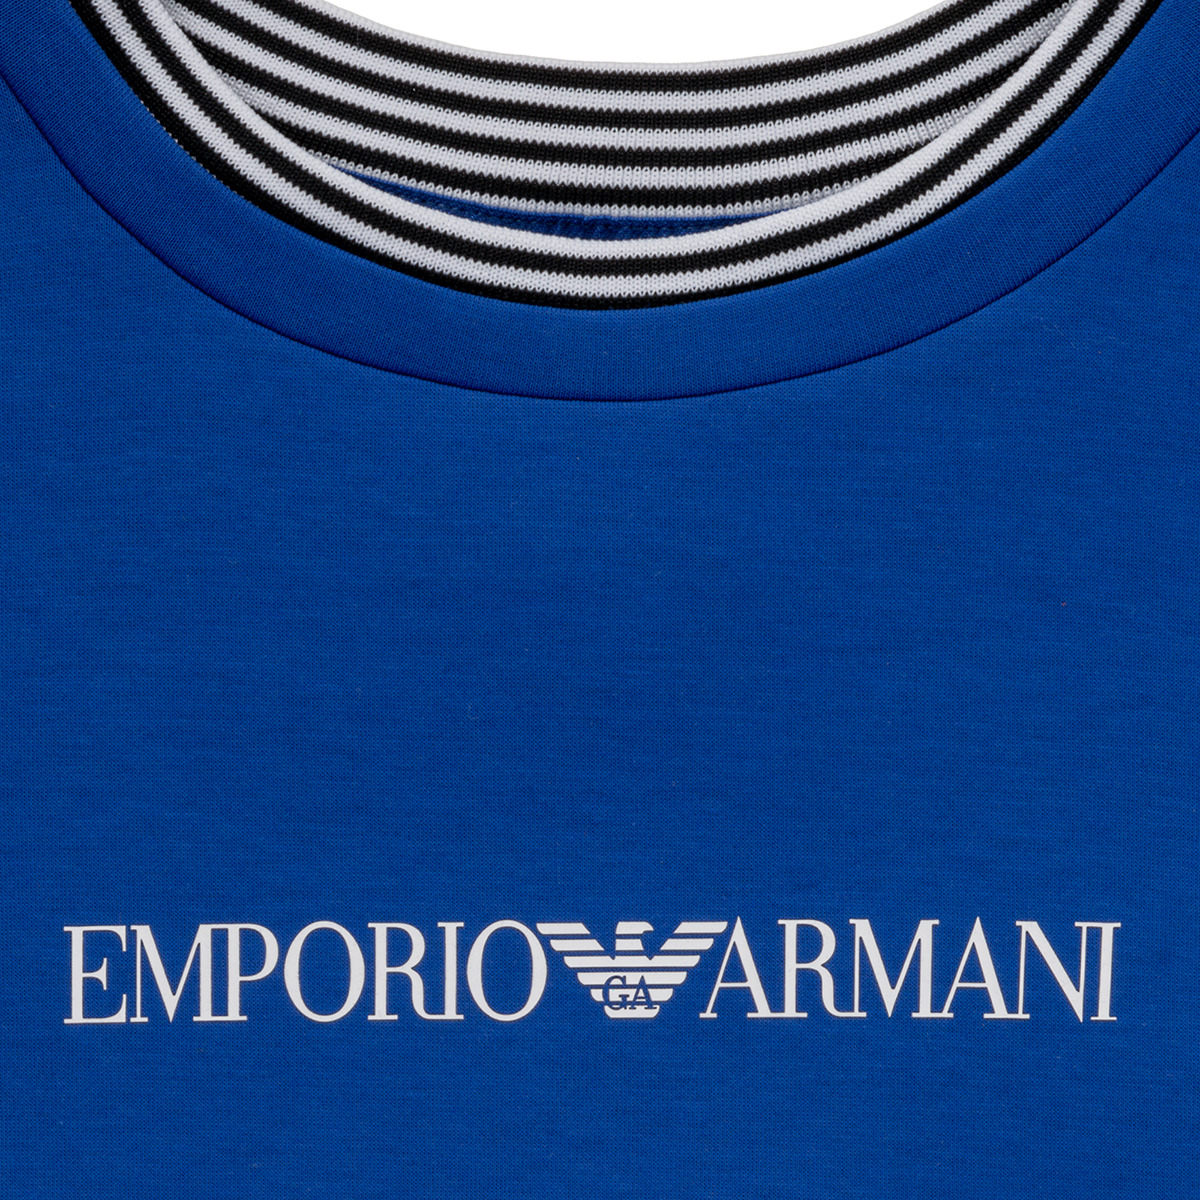 Emporio Armani Bleu Aurèle sLI89jm4